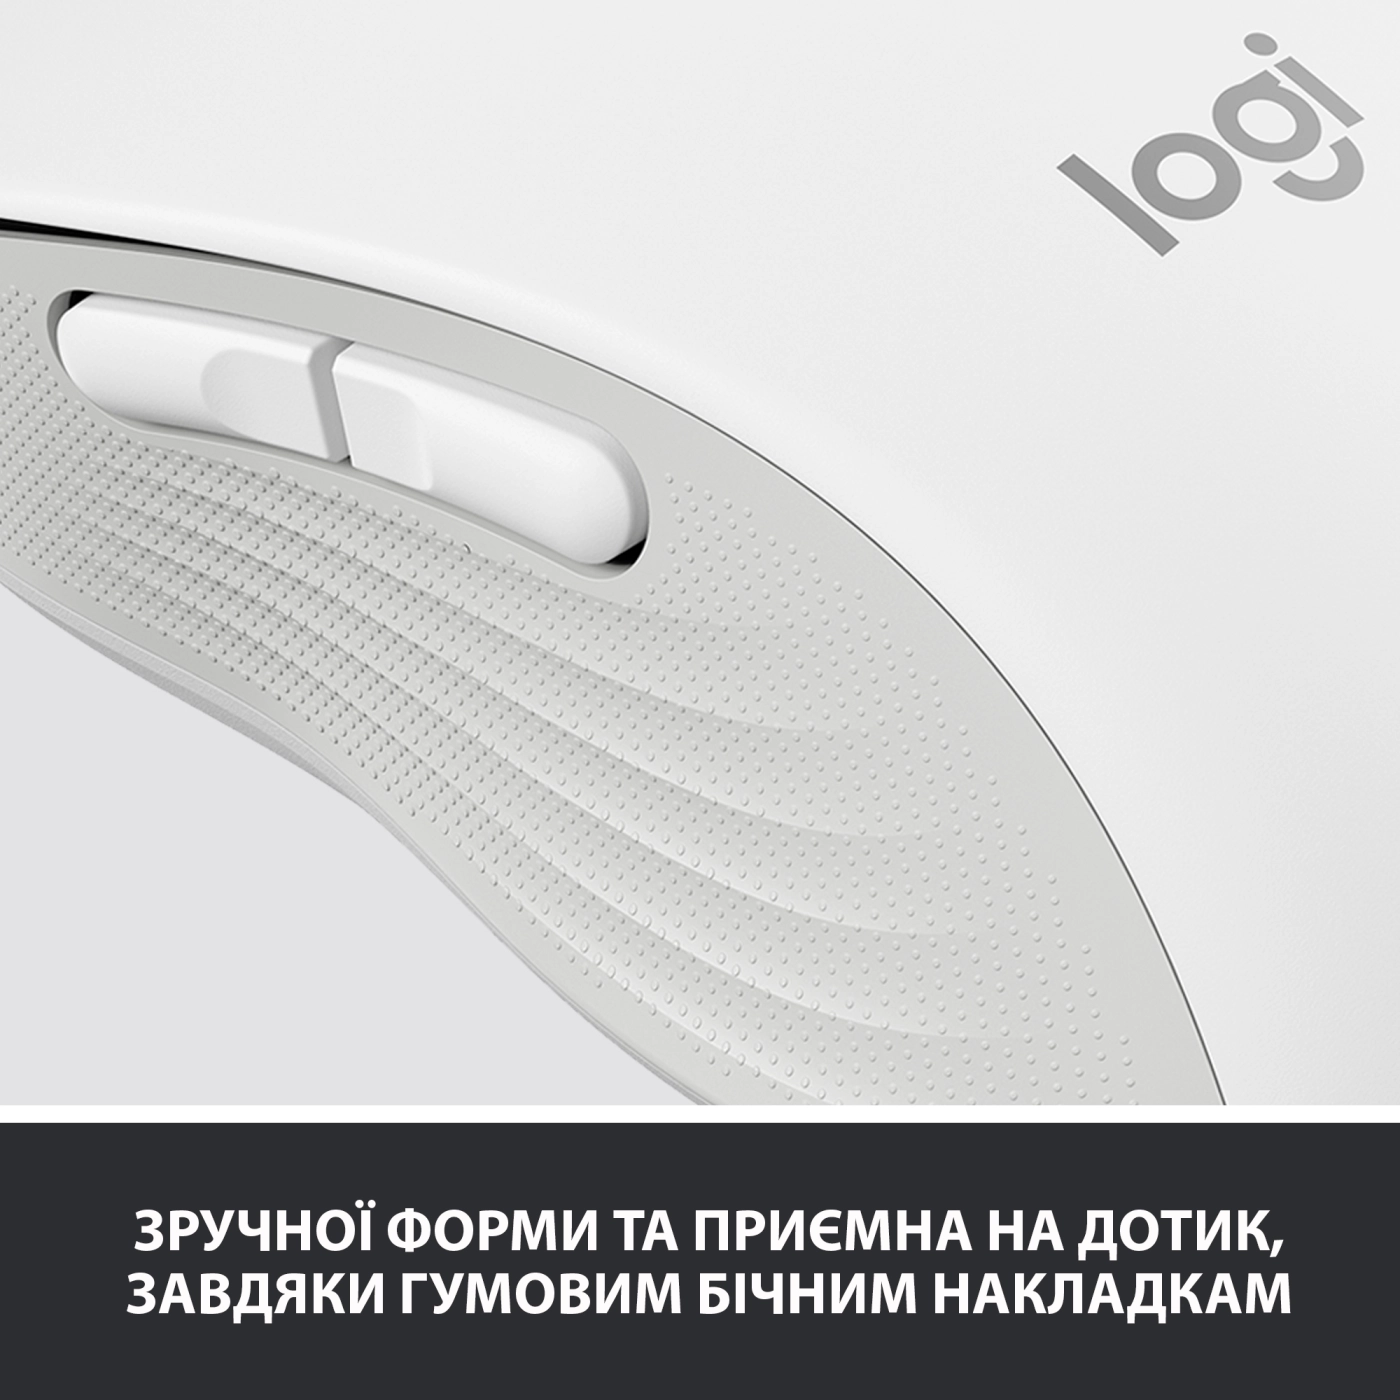 Купить Мышь Logitech Signature M650 Wireless Mouse off-white BT (910-006255) - фото 7